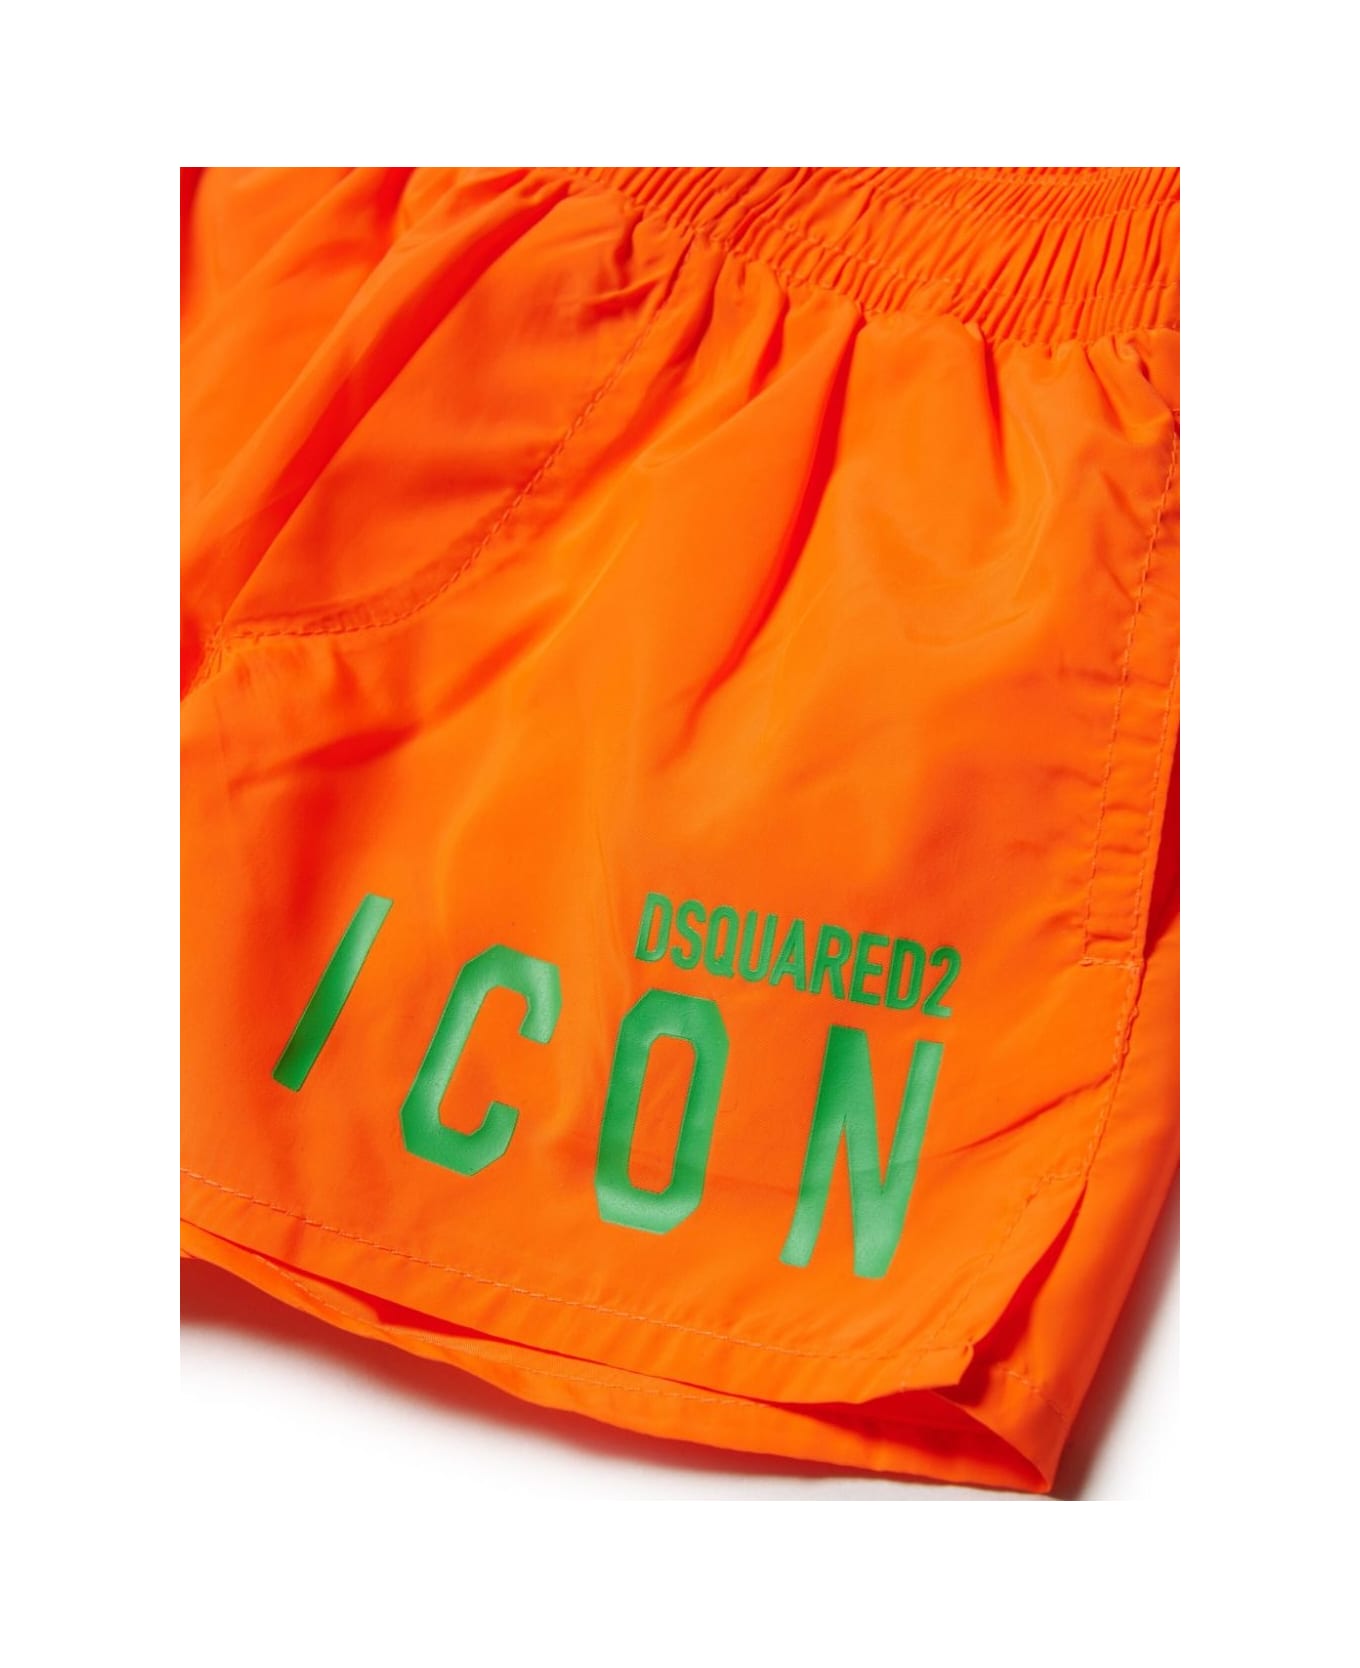 Dsquared2 Orange Swimsuit With Icon Logo Dsquared2 - Orange